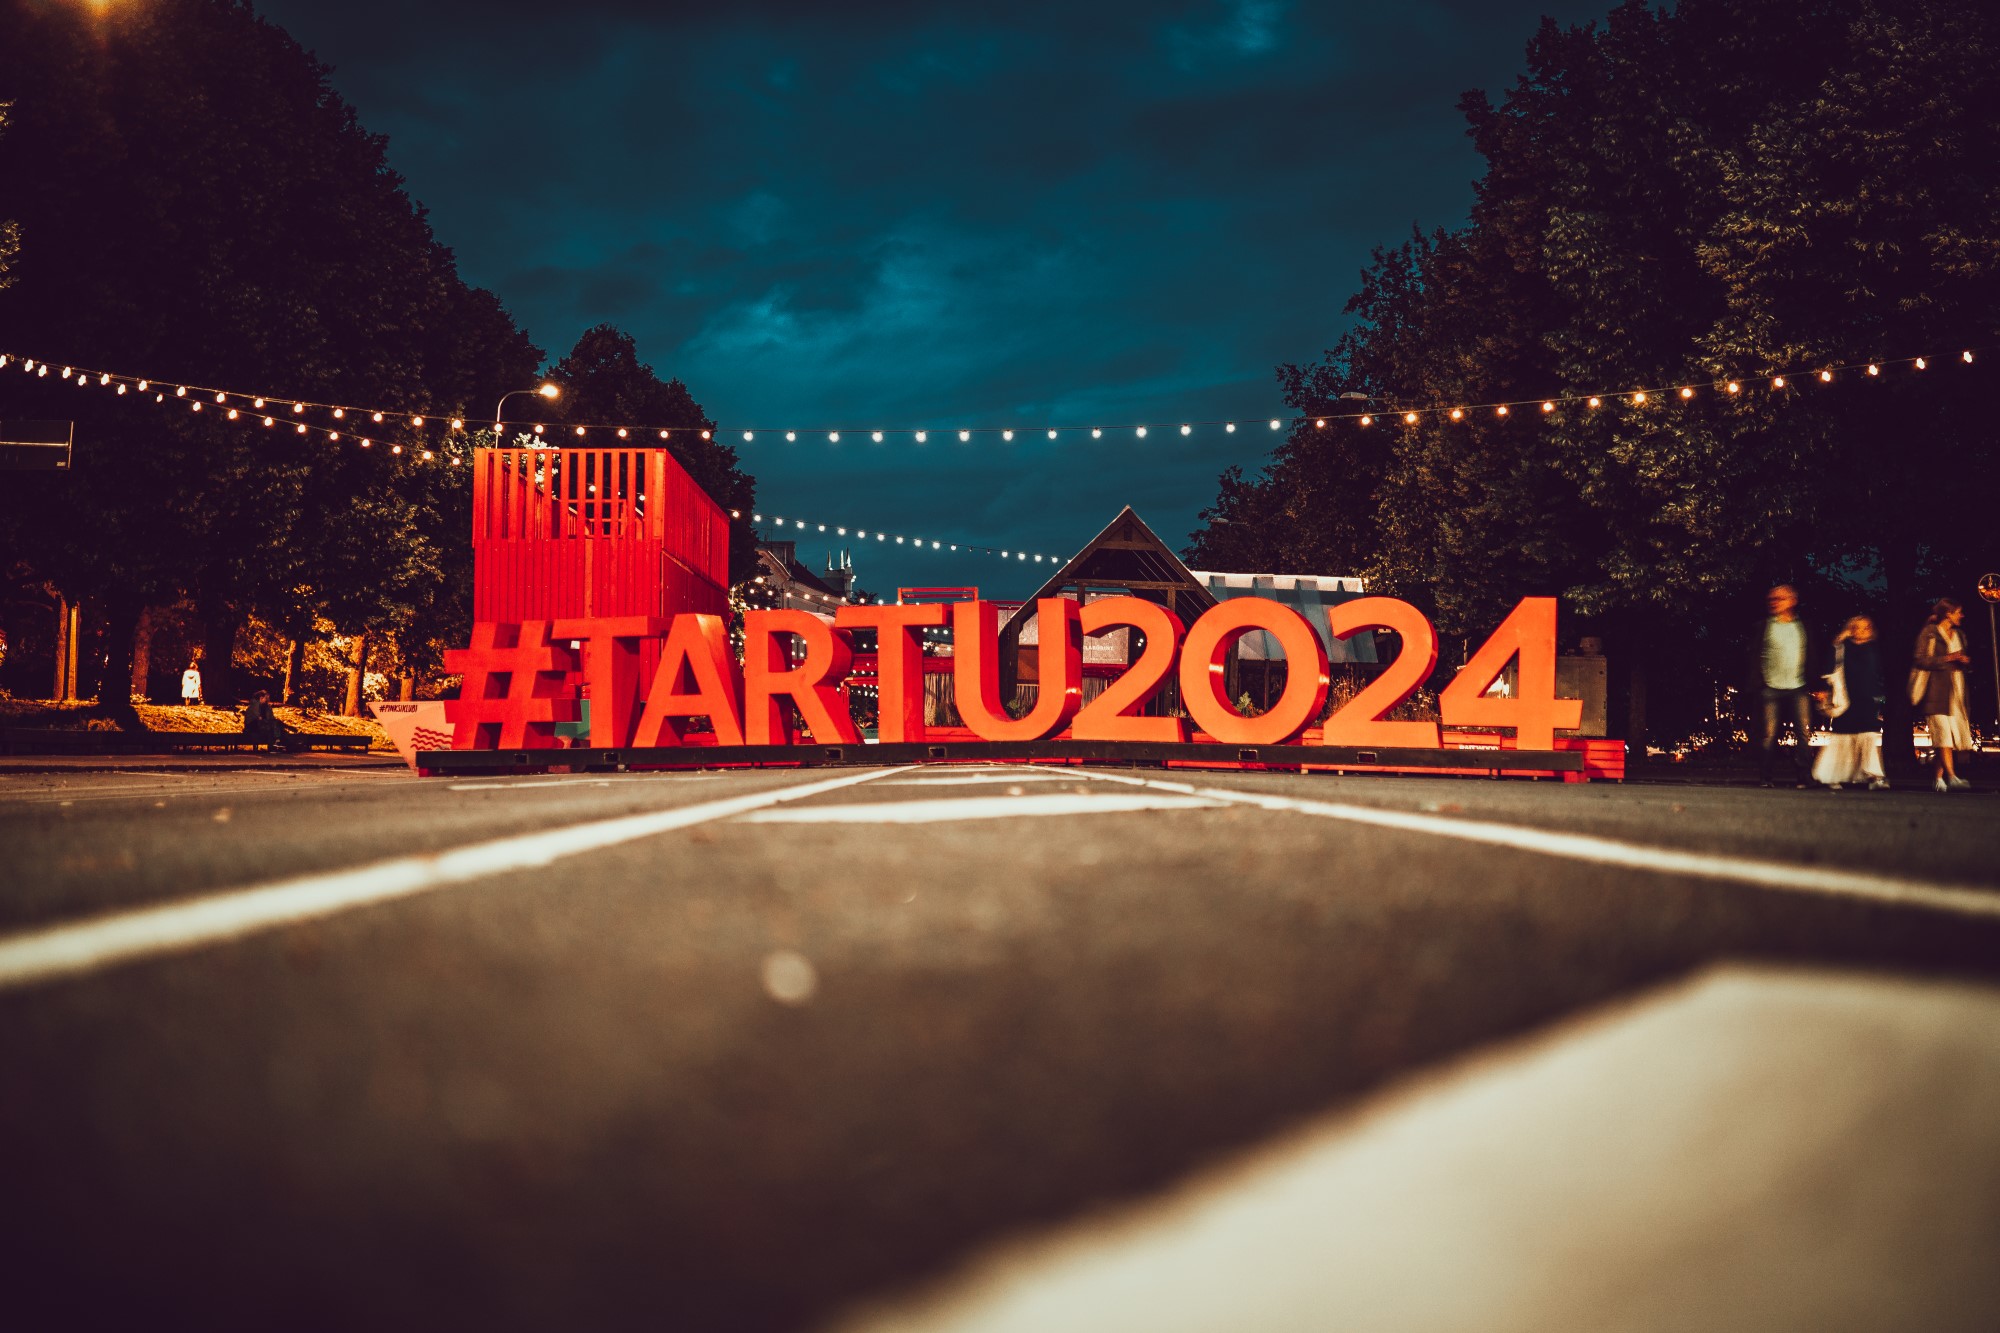 Tartu 2024 by Mana Kaasik